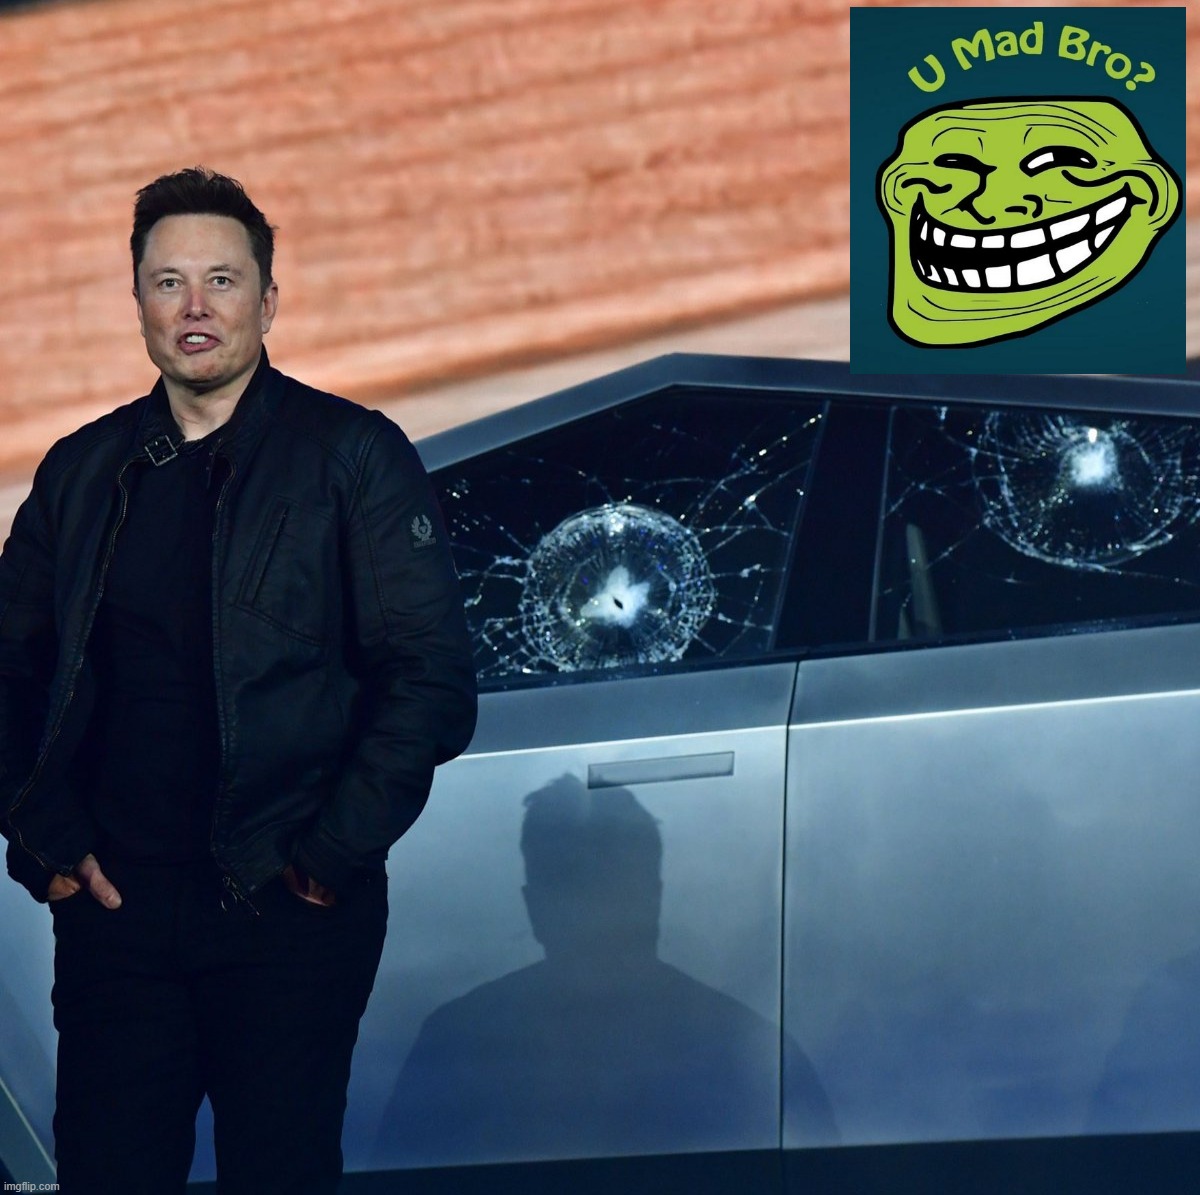 Elon Musk u mad bro | image tagged in elon musk u mad bro | made w/ Imgflip meme maker